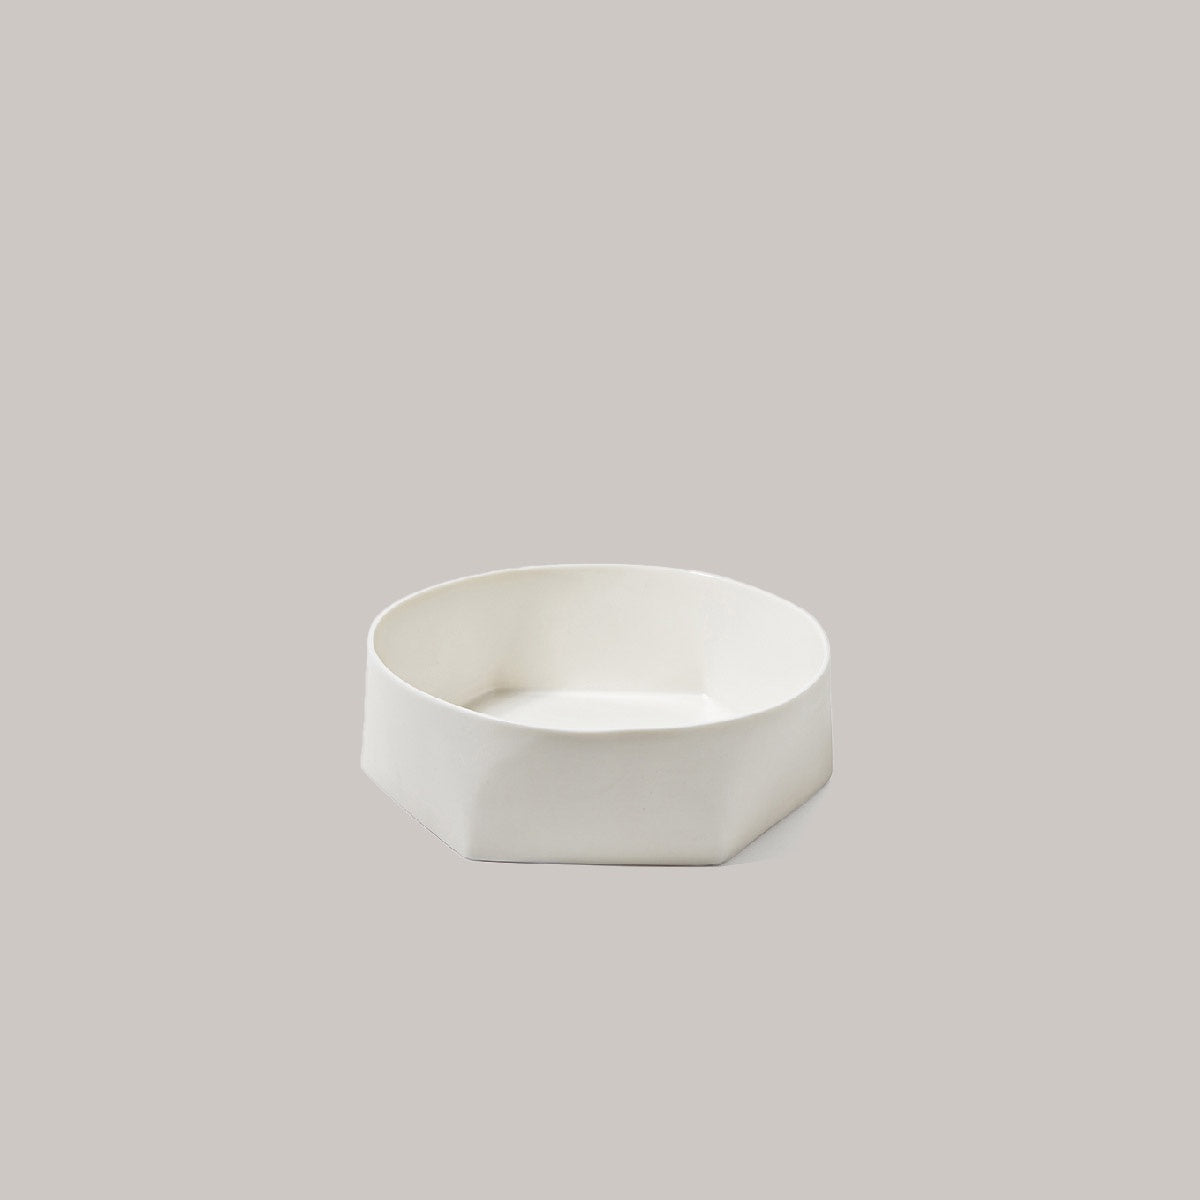 Oru Ceramic Bowls